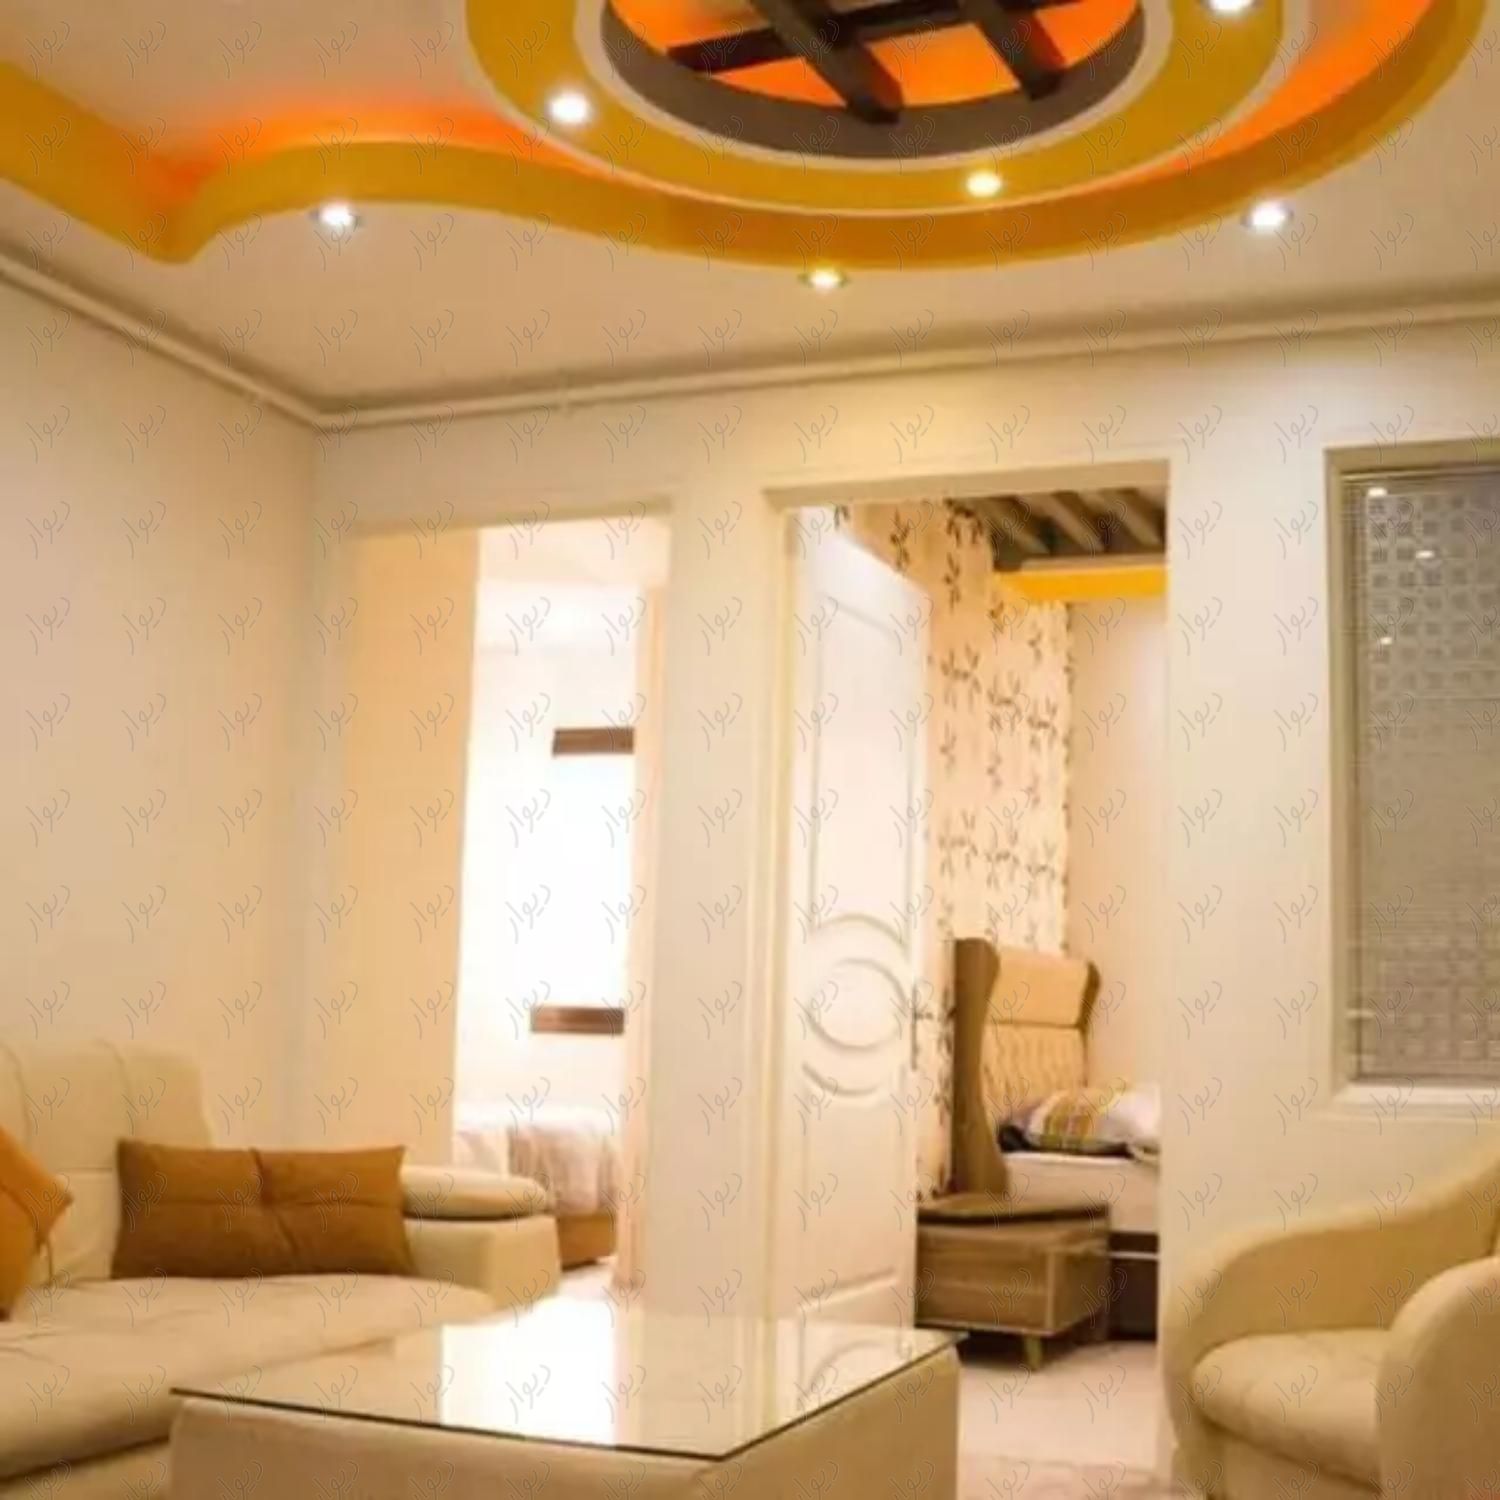 سوییت هتل آپارتمان مرکز شهر آبرسان|اجارهٔ کوتاه مدت آپارتمان و سوئیت|تبریز, |دیوار